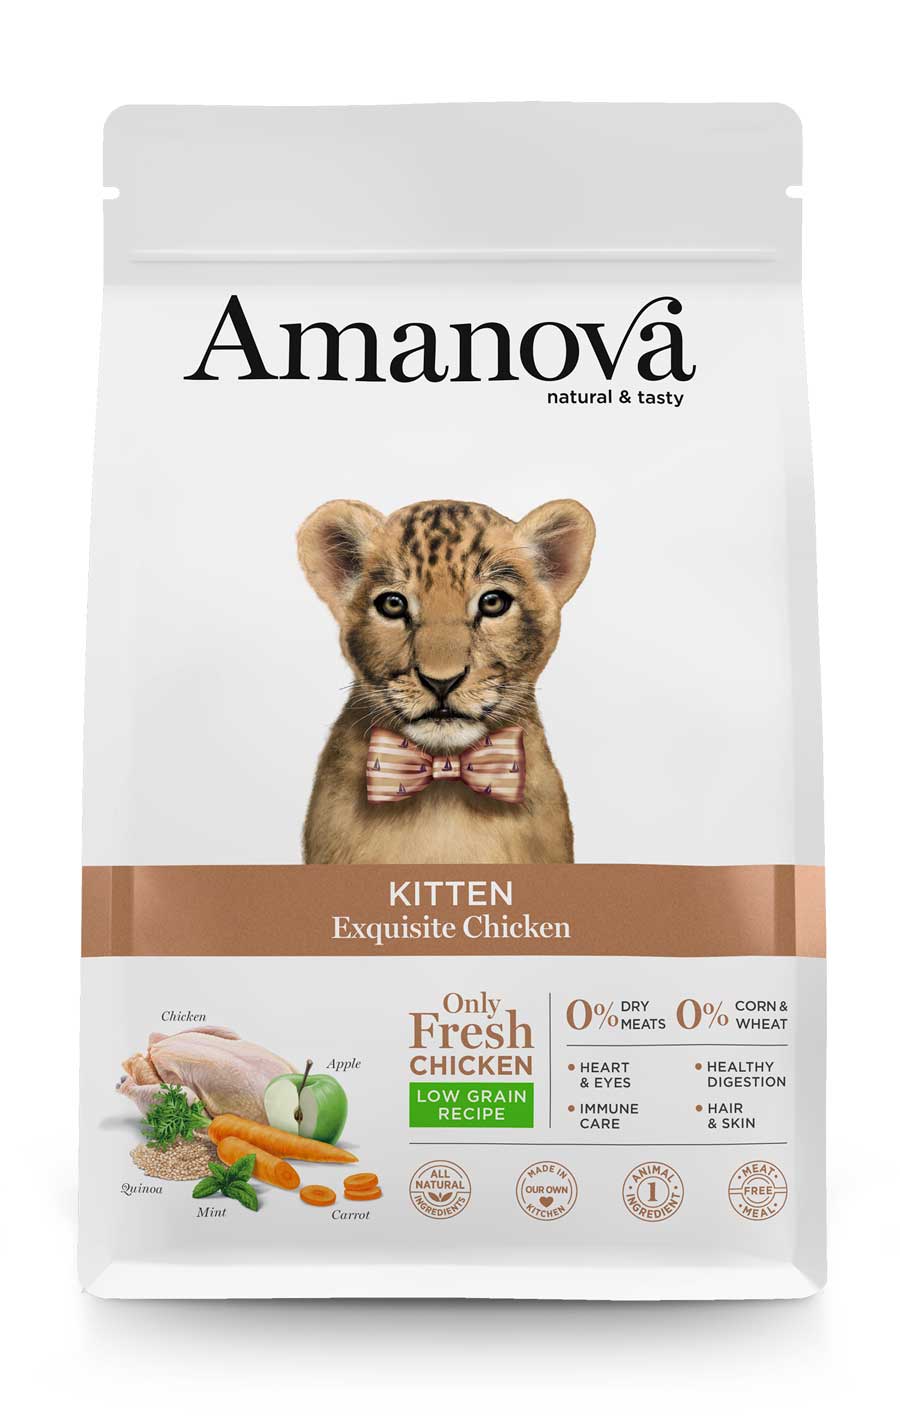 Amanova Dry Kitten Exquisite Chicken - 300g